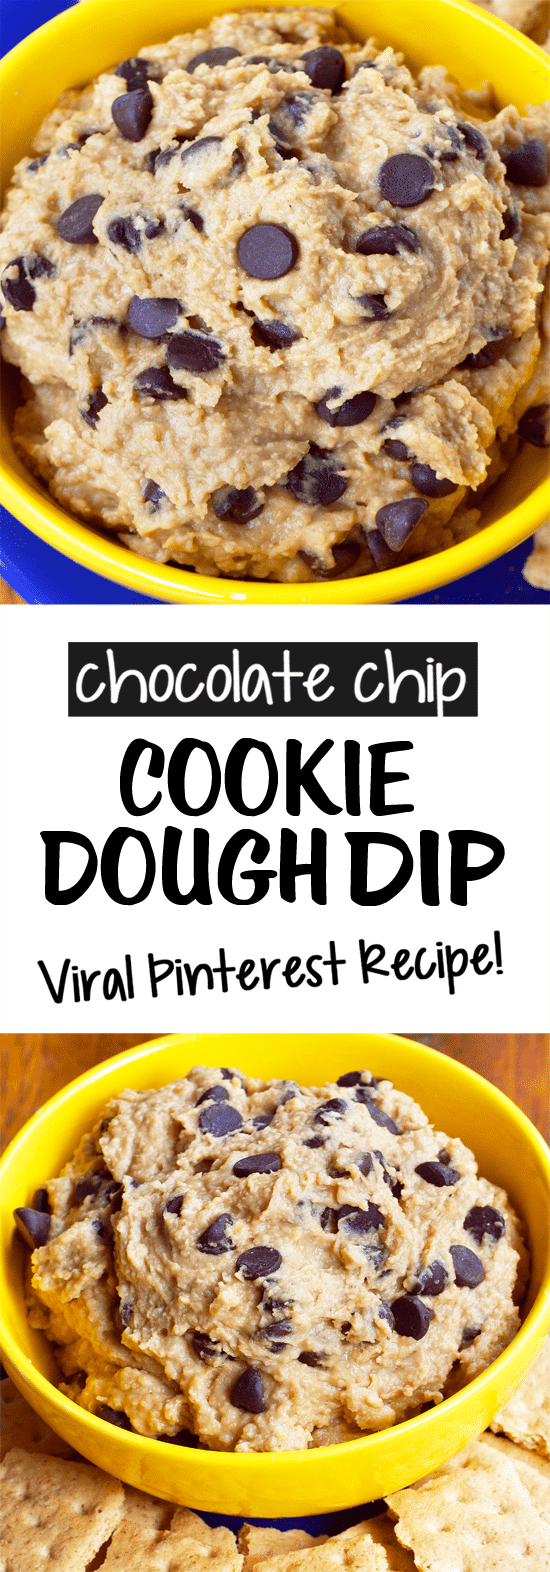 The Original Secretly Healthy Chickpea Cookie Dough Dip Recipe